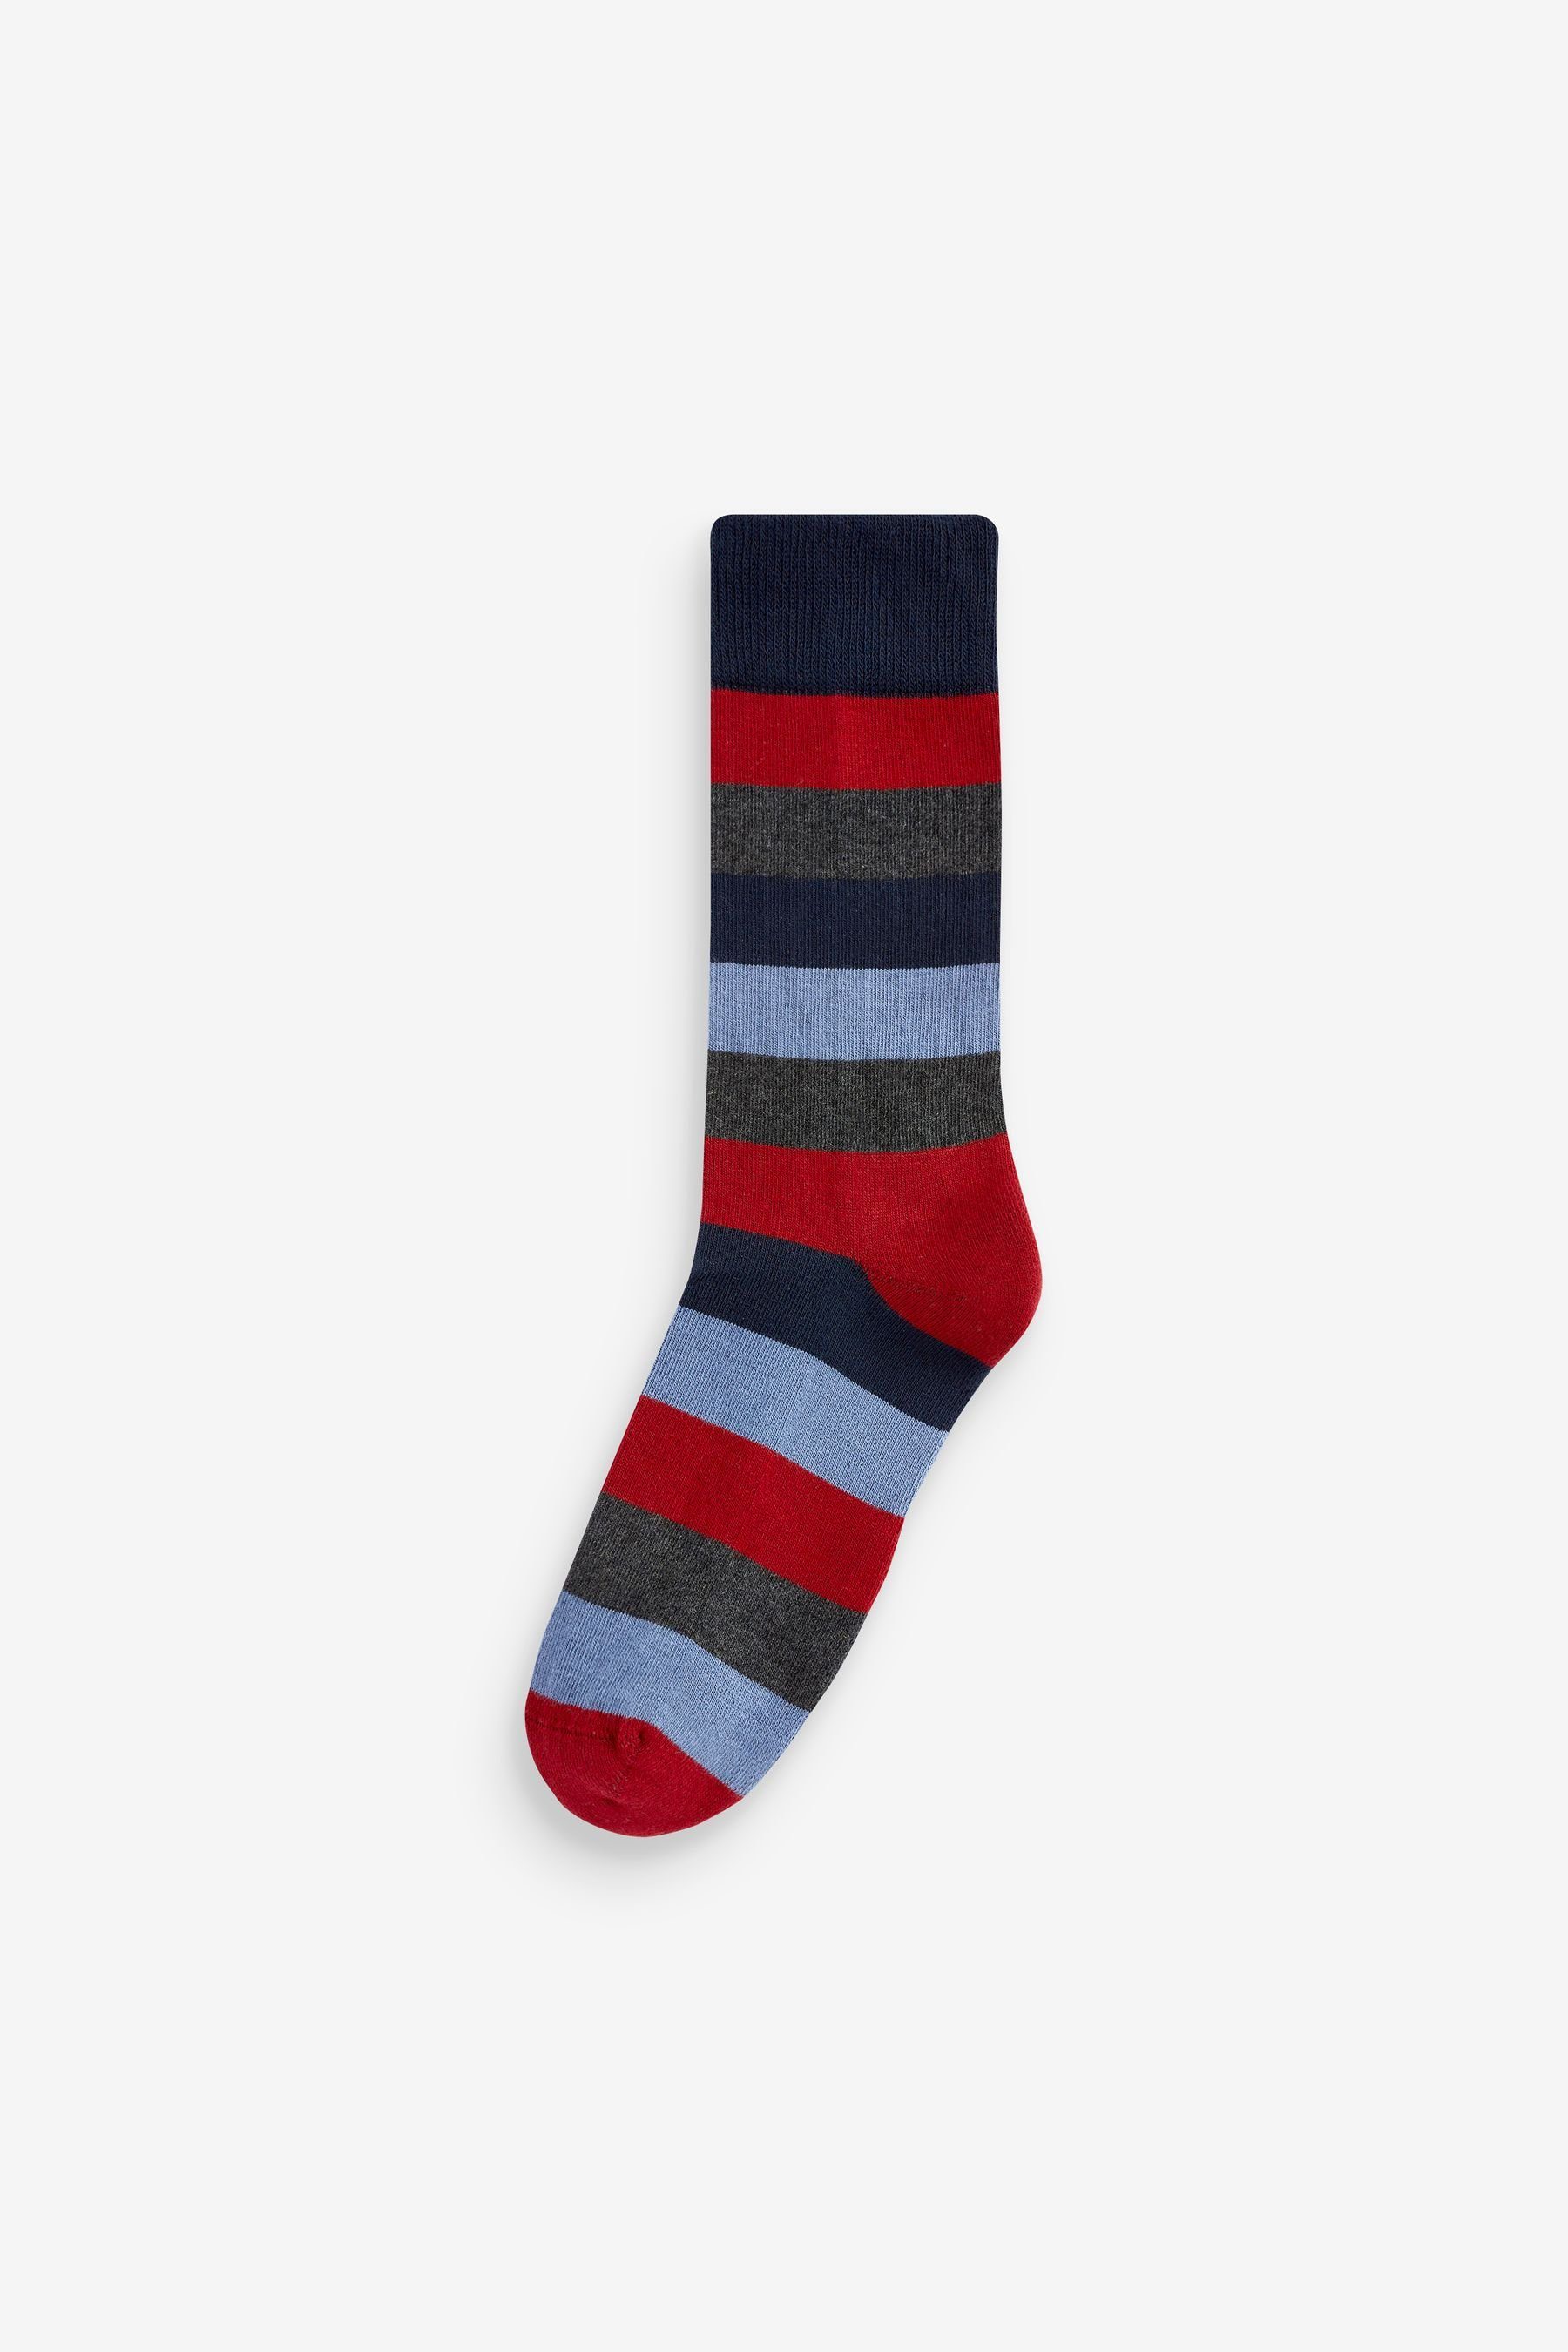 Sohle, Stripe Socken 10er-Pack (10-Paar) mit Kurzsocken Next gepolsterter